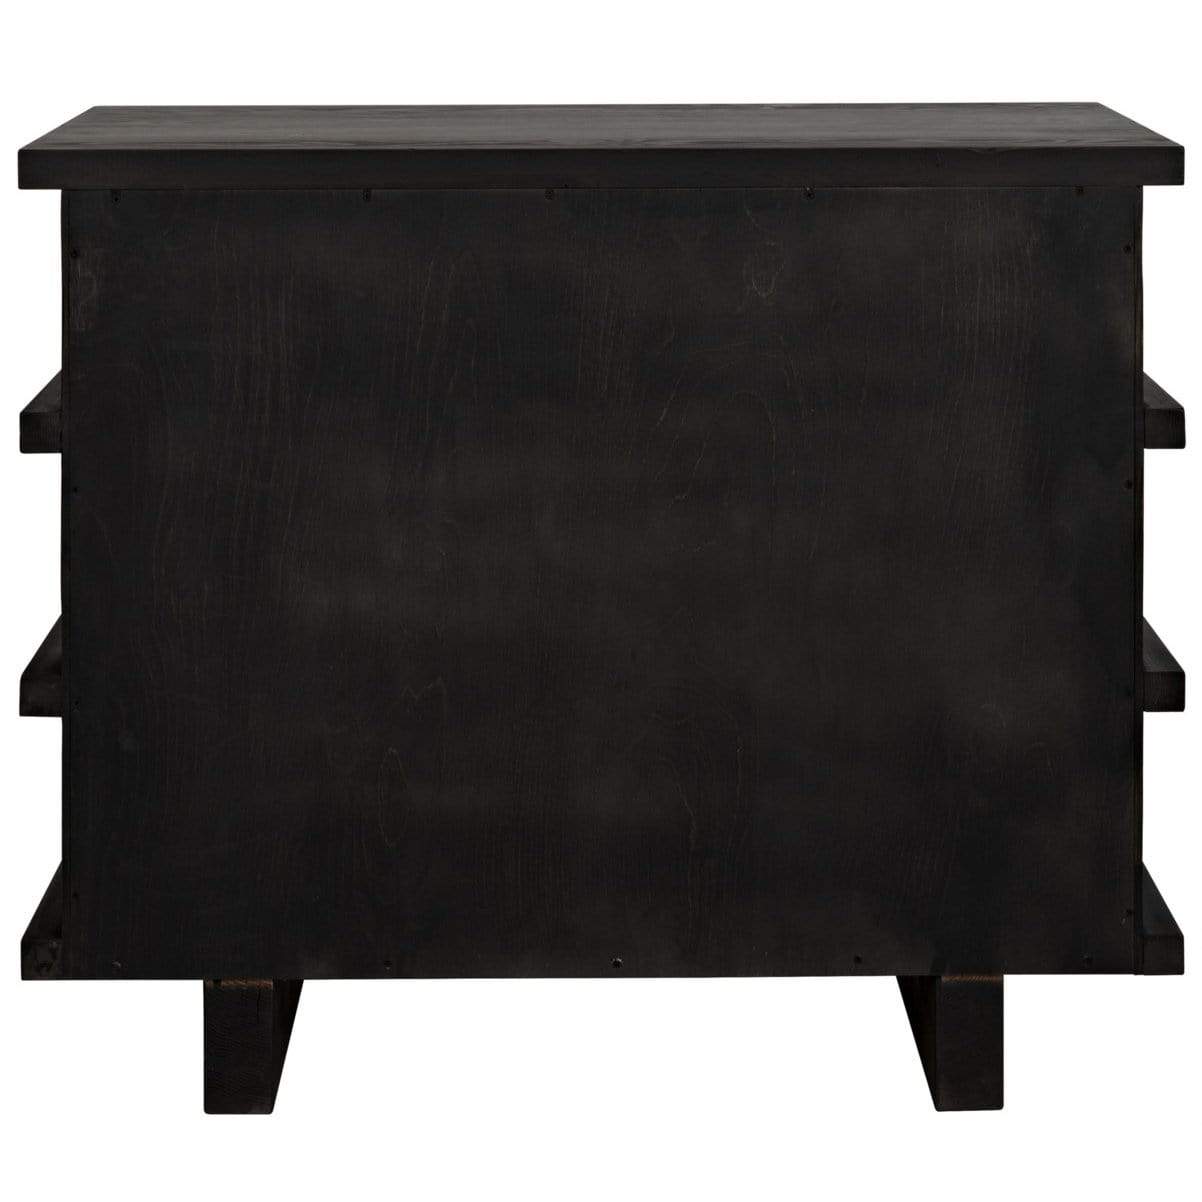 CFC Bergamont Small Dresser - Black Wax Furniture